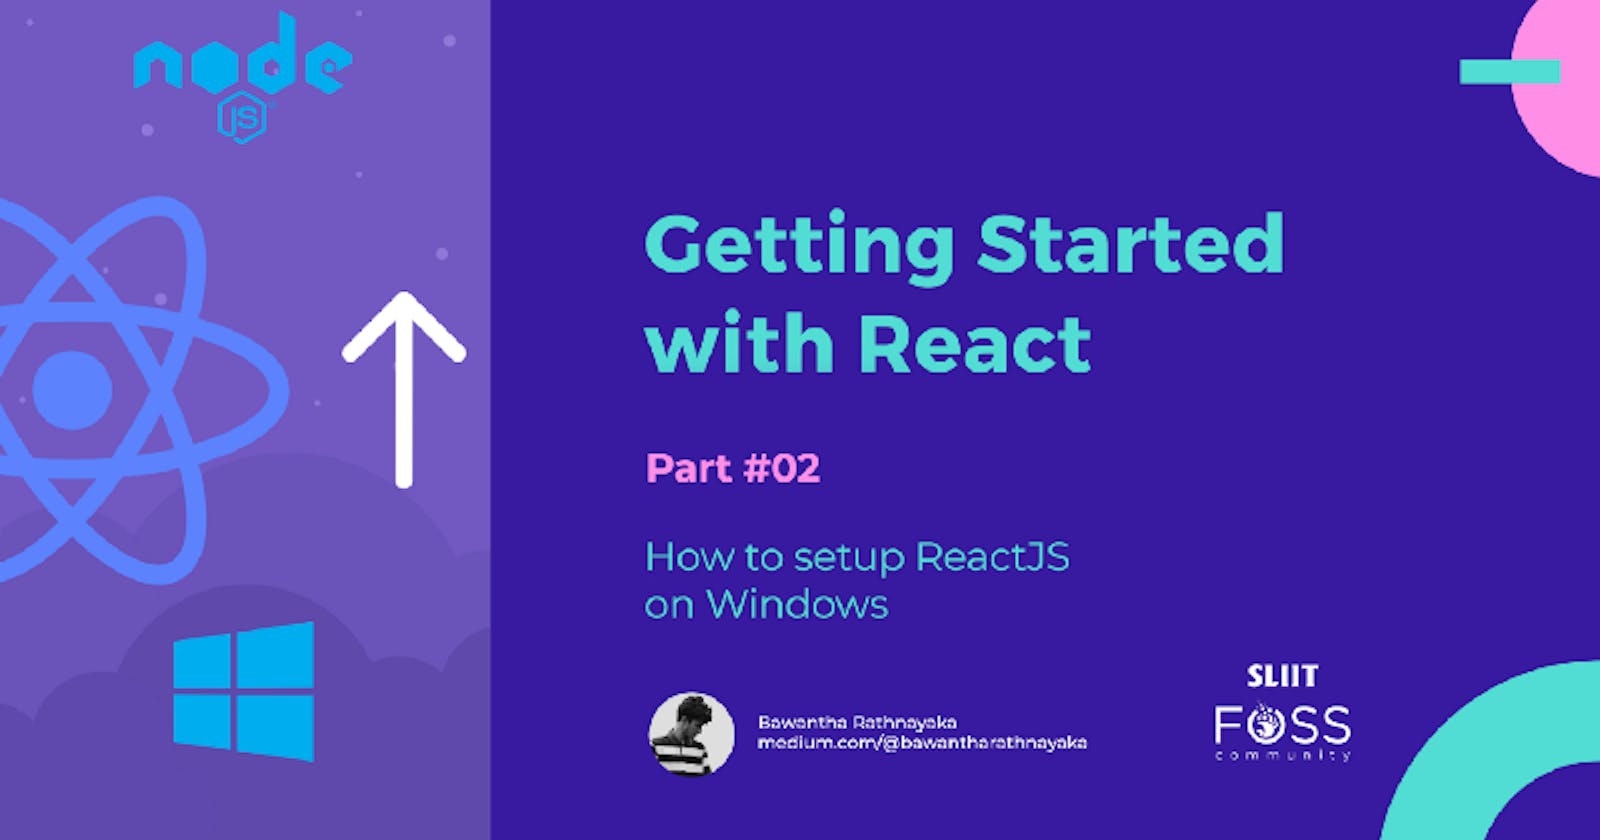 How to setup ReactJS on Windows (part II)